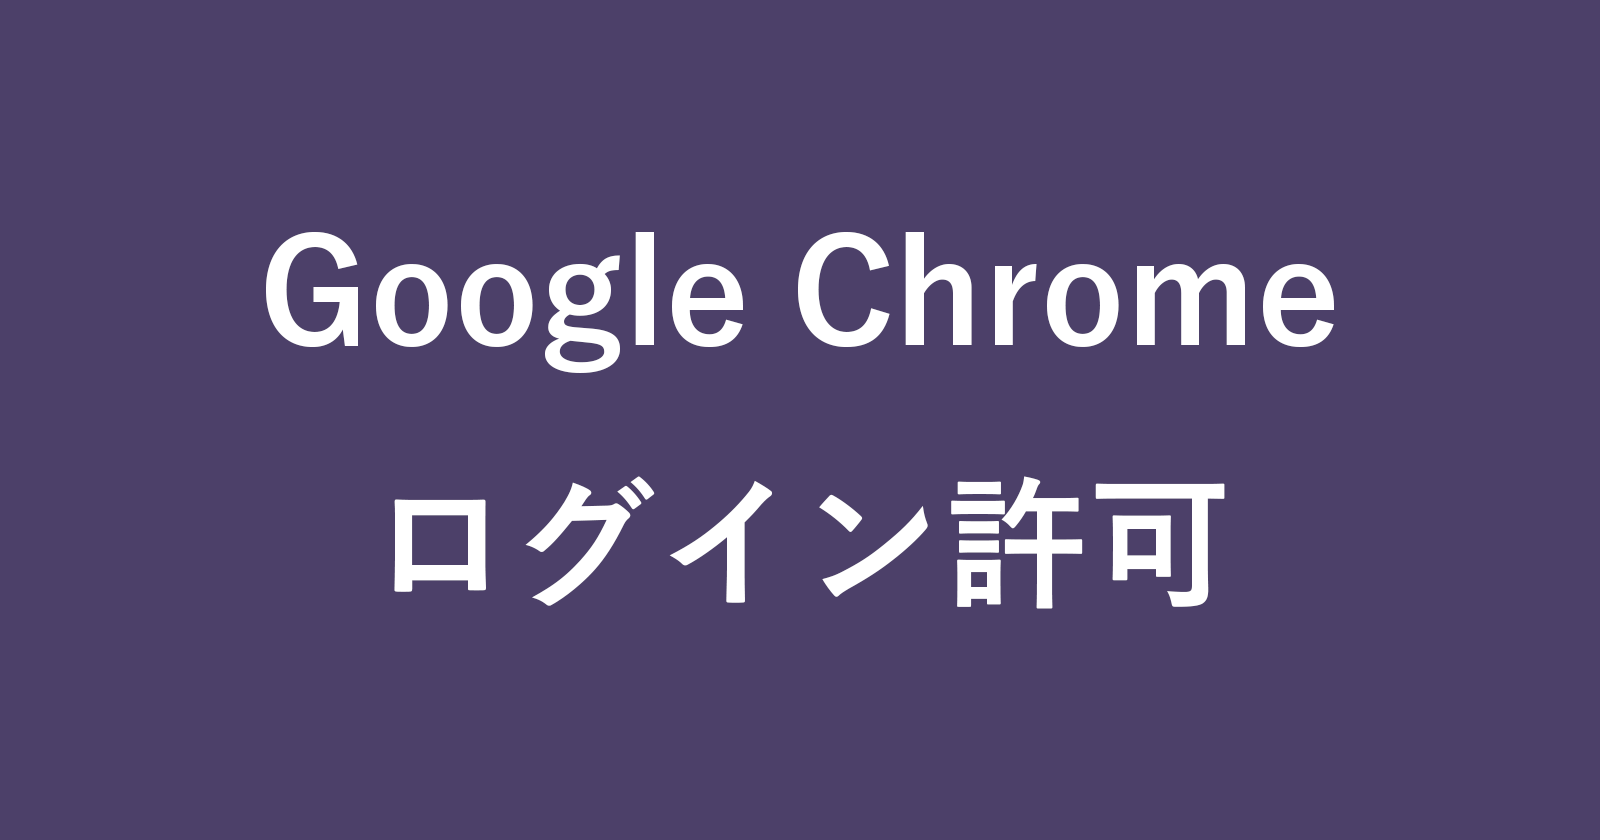 google chrome login